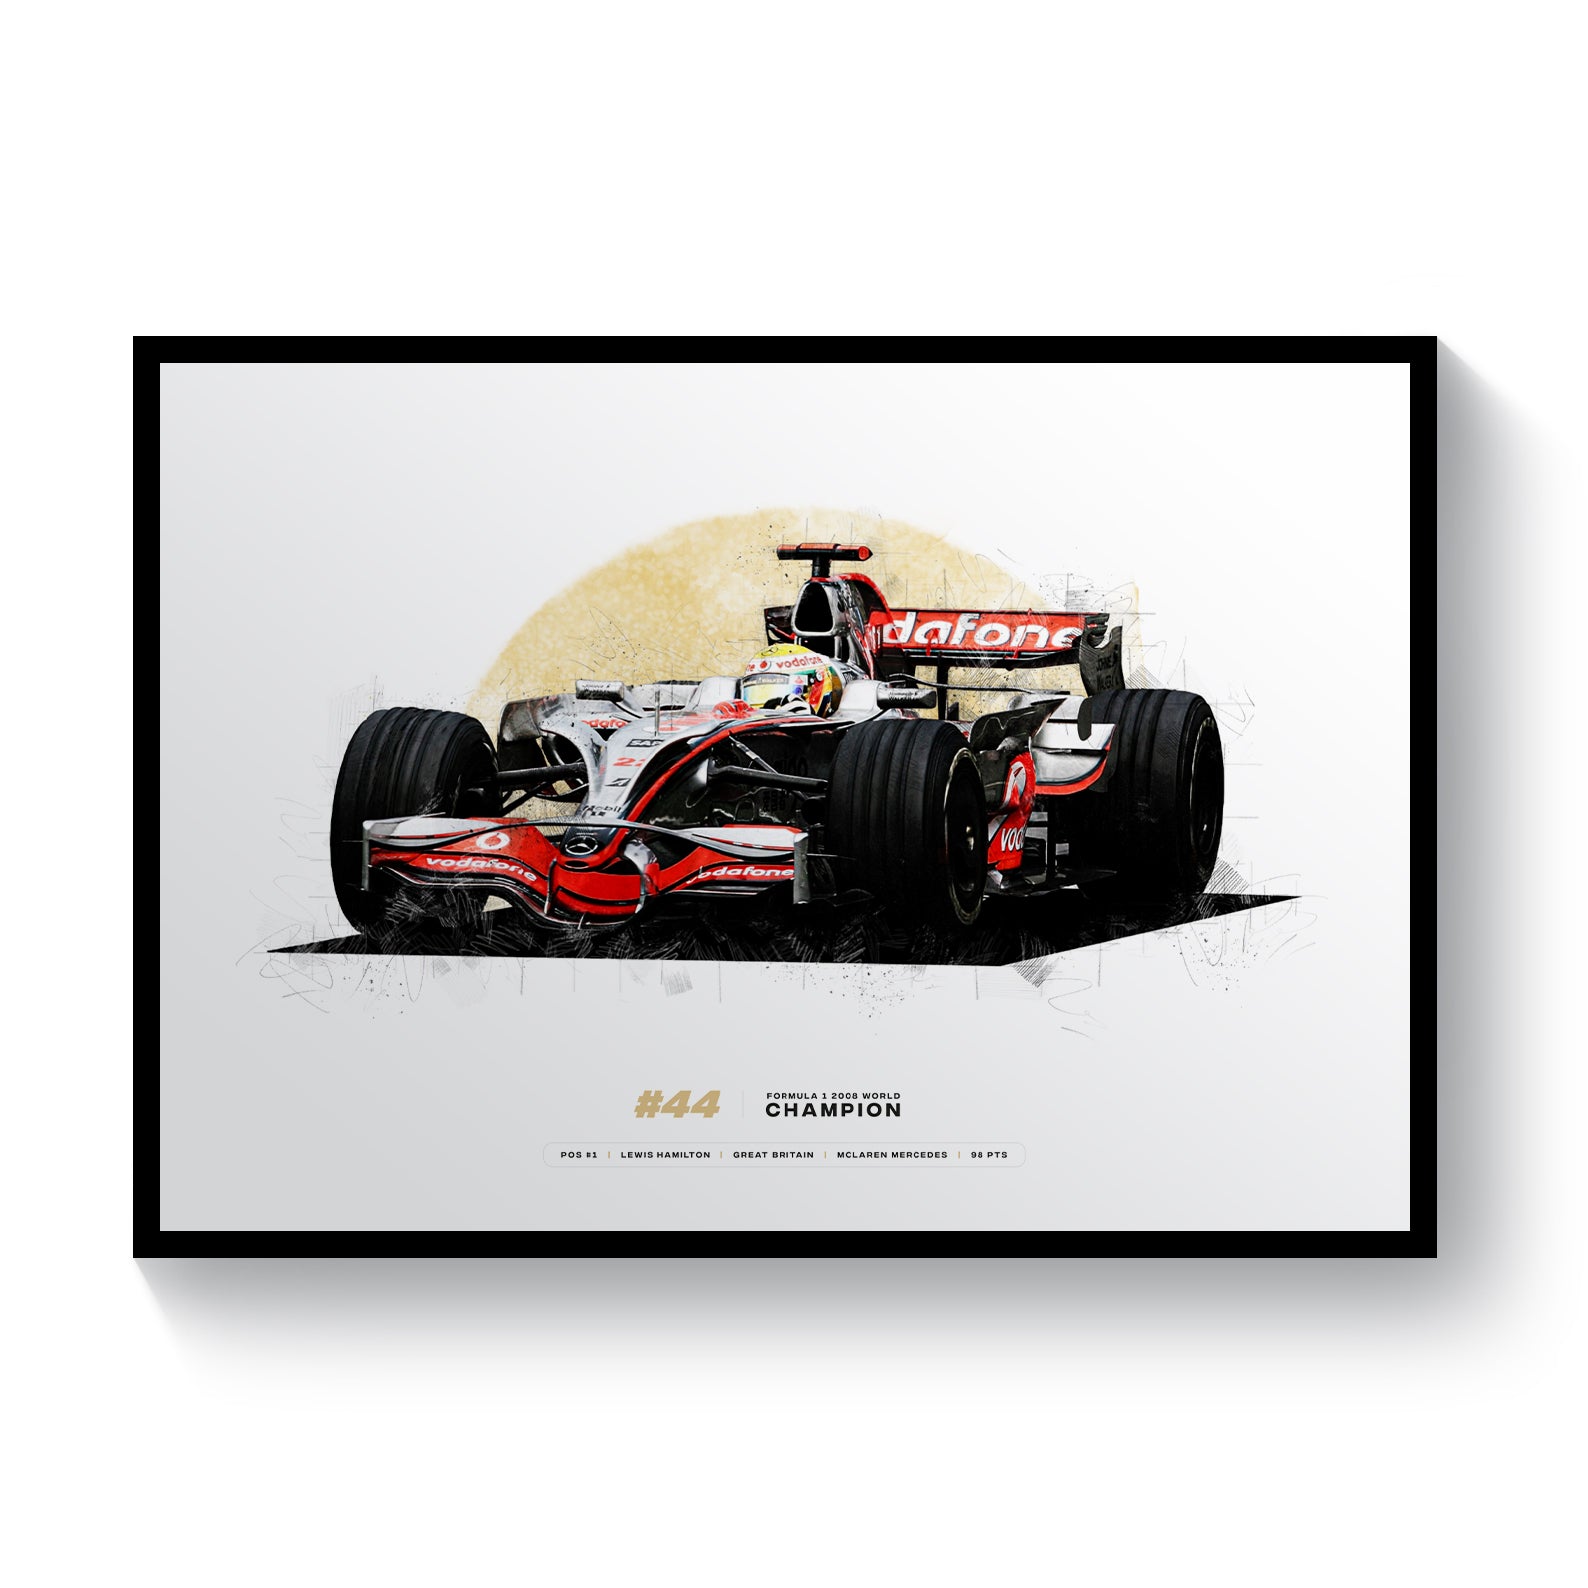 Lewis Hamilton Champion - Lewis Hamilton - Posters and Art Prints